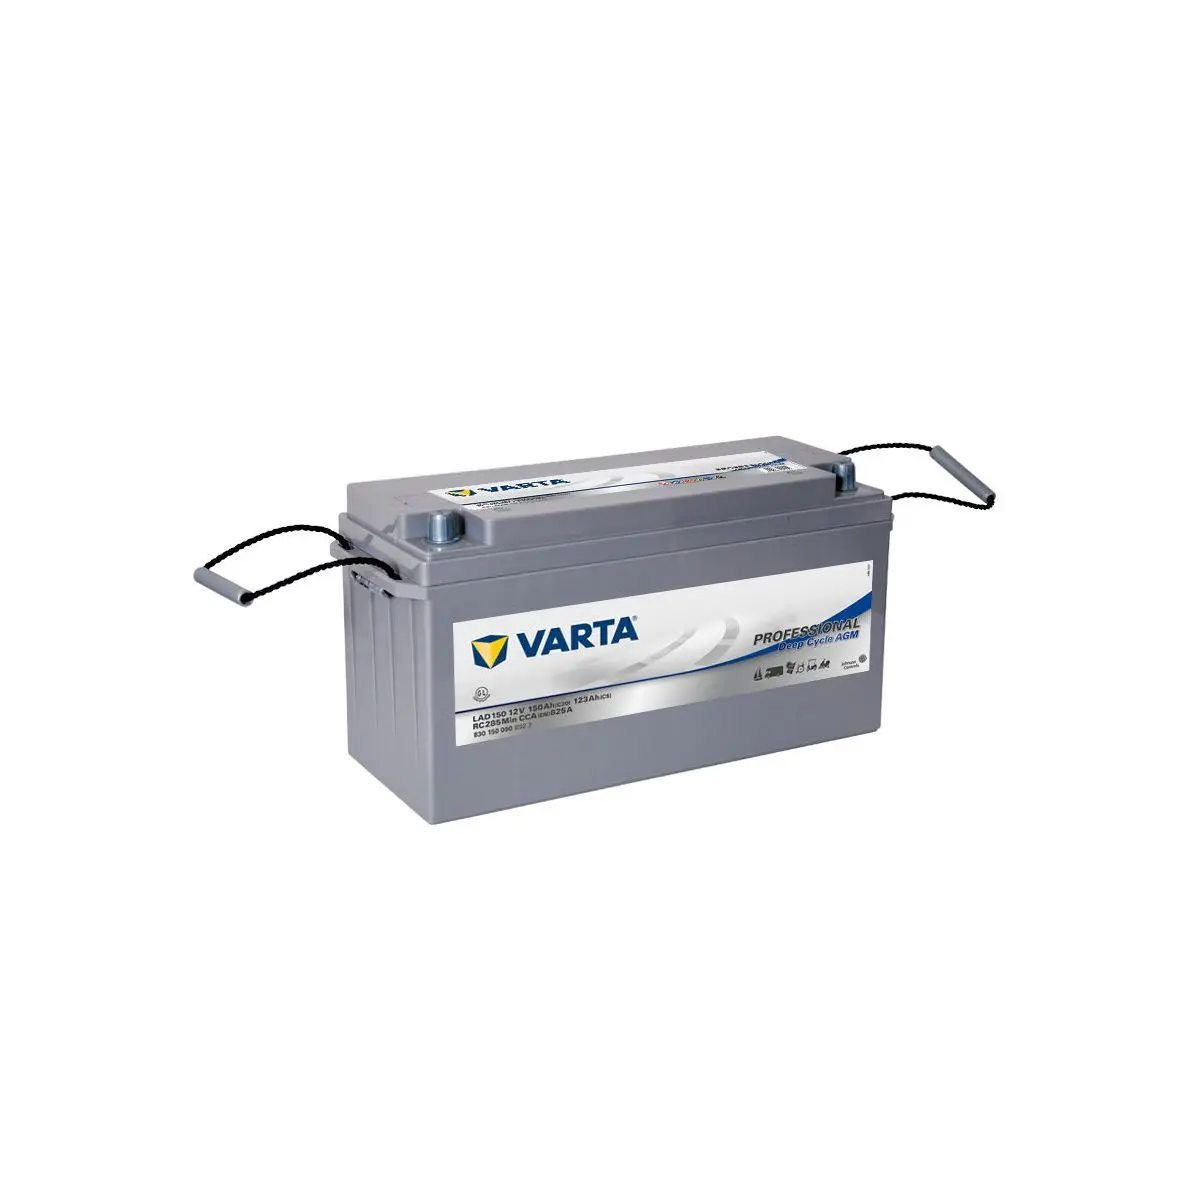 VARTA Professional Deep Cycle - AGM LAD150